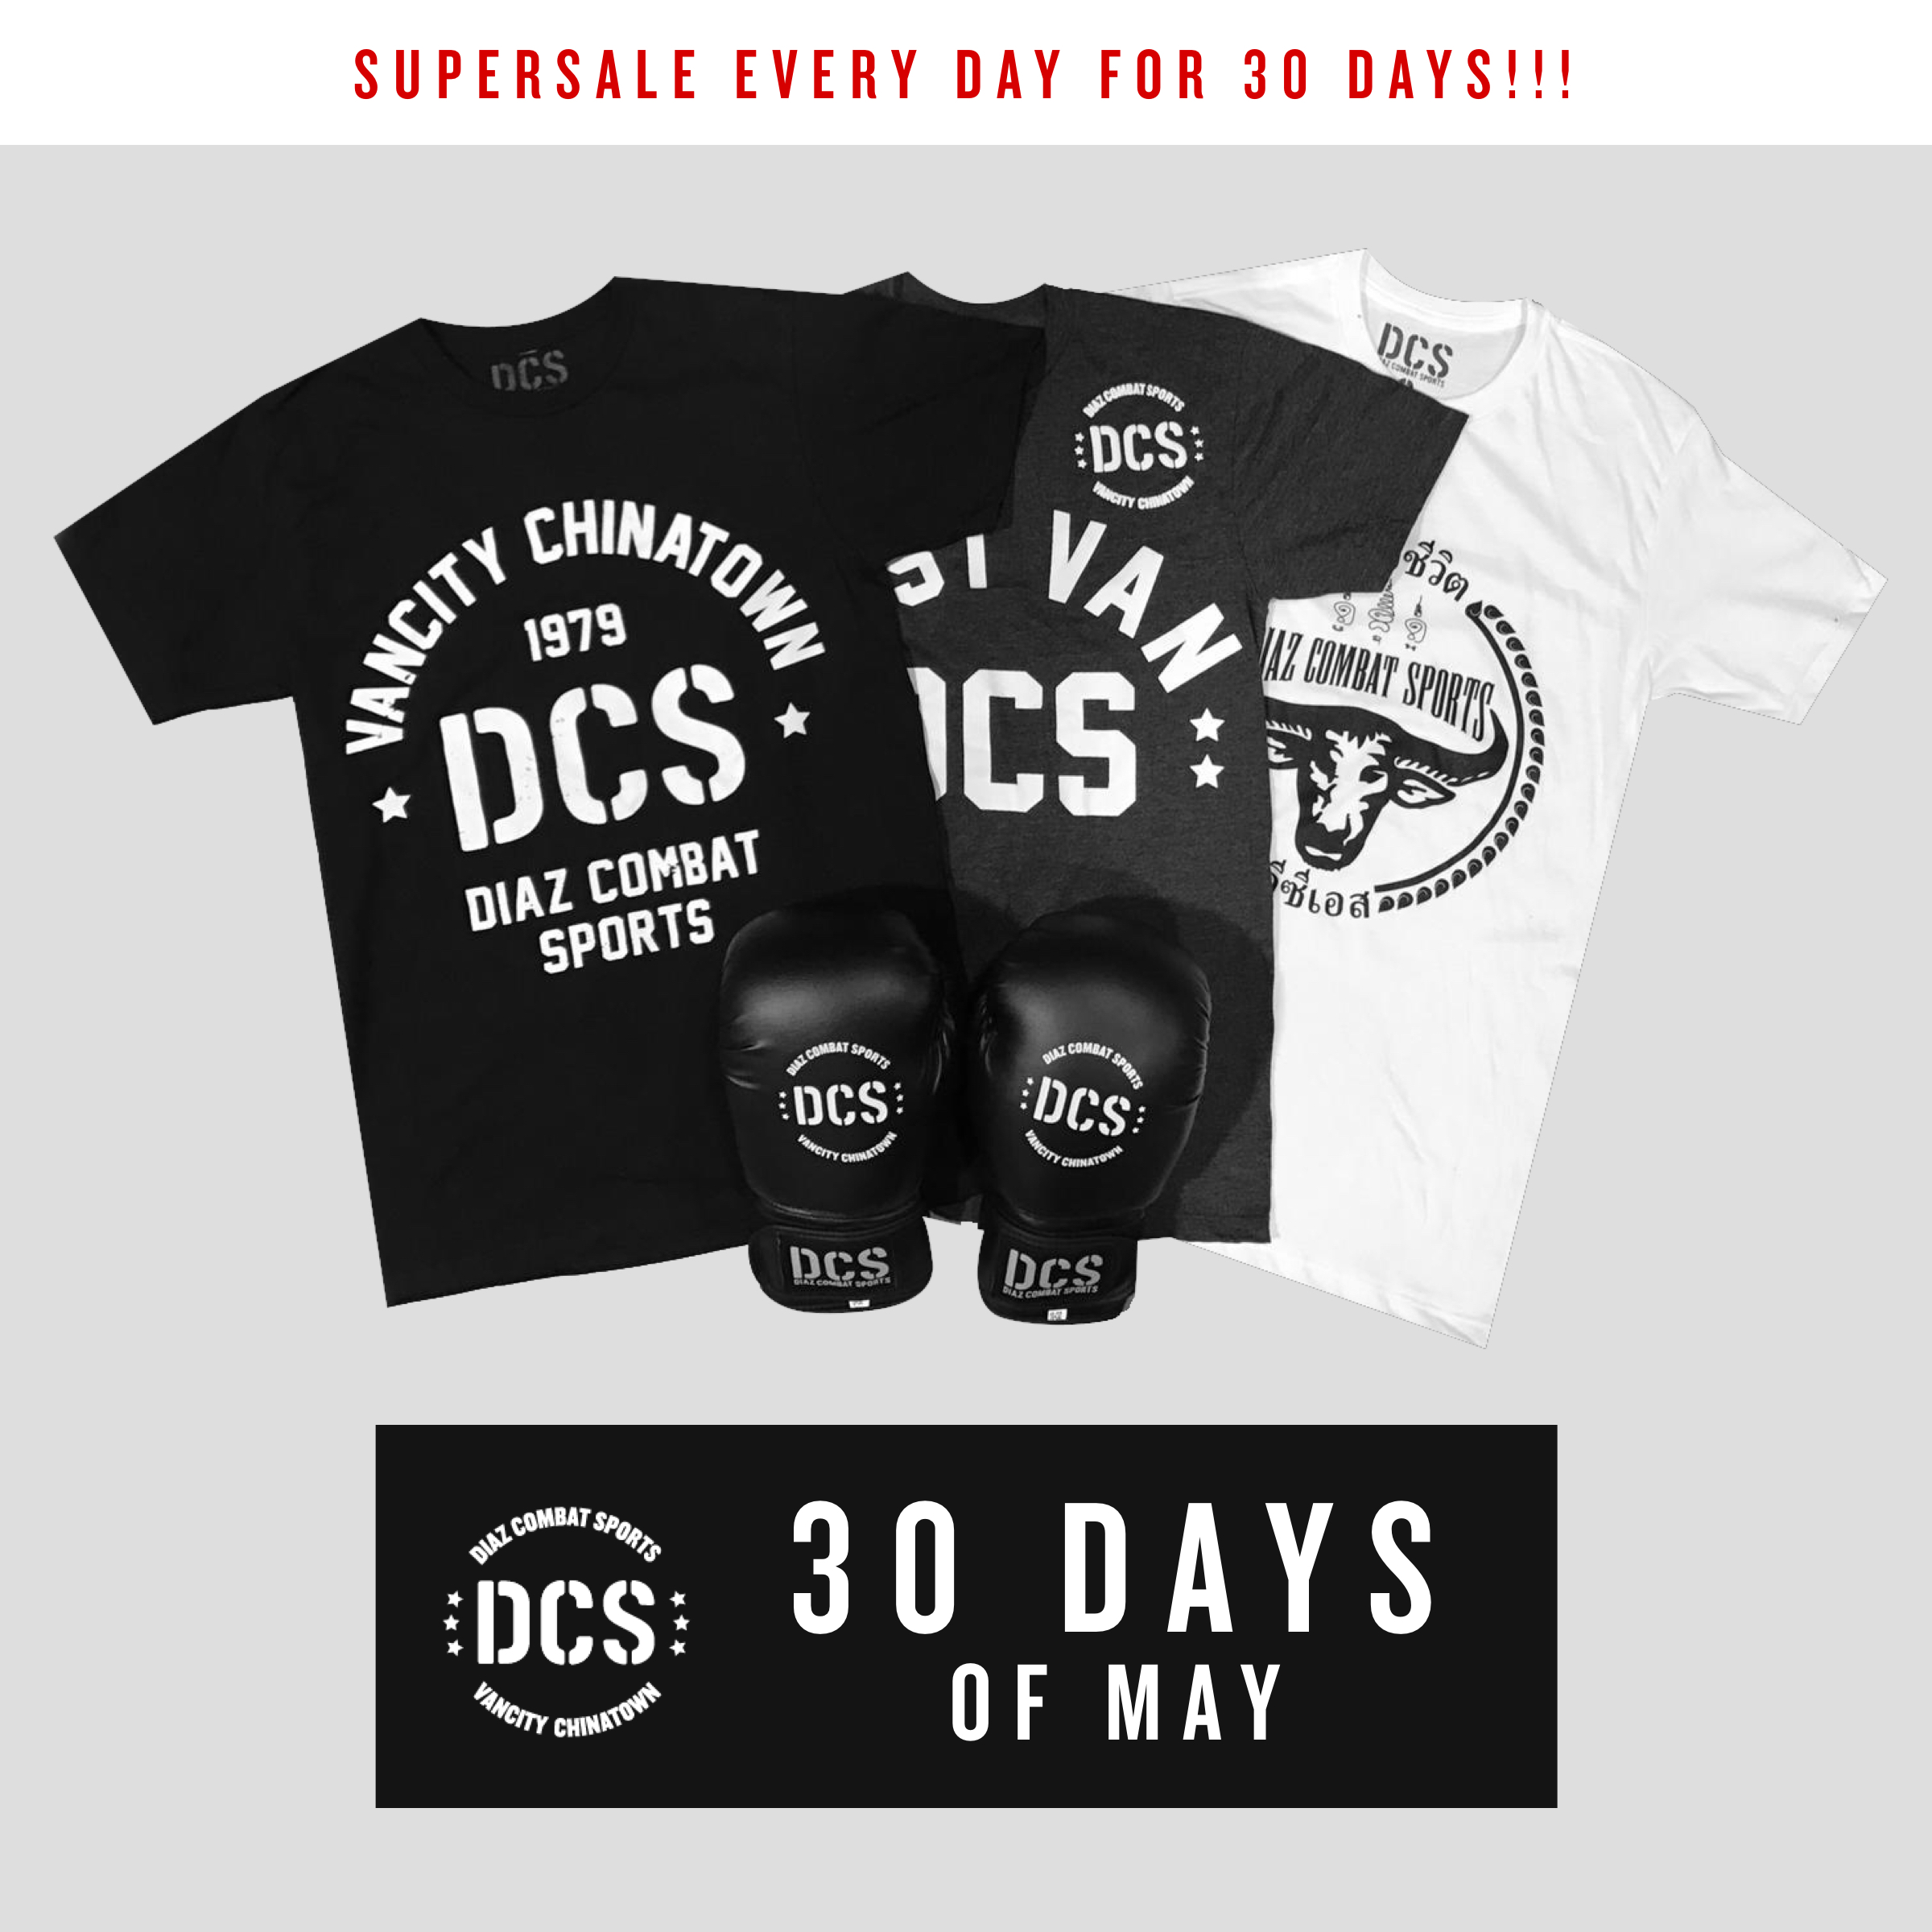 DCS Diaz Combat Sports merchandise